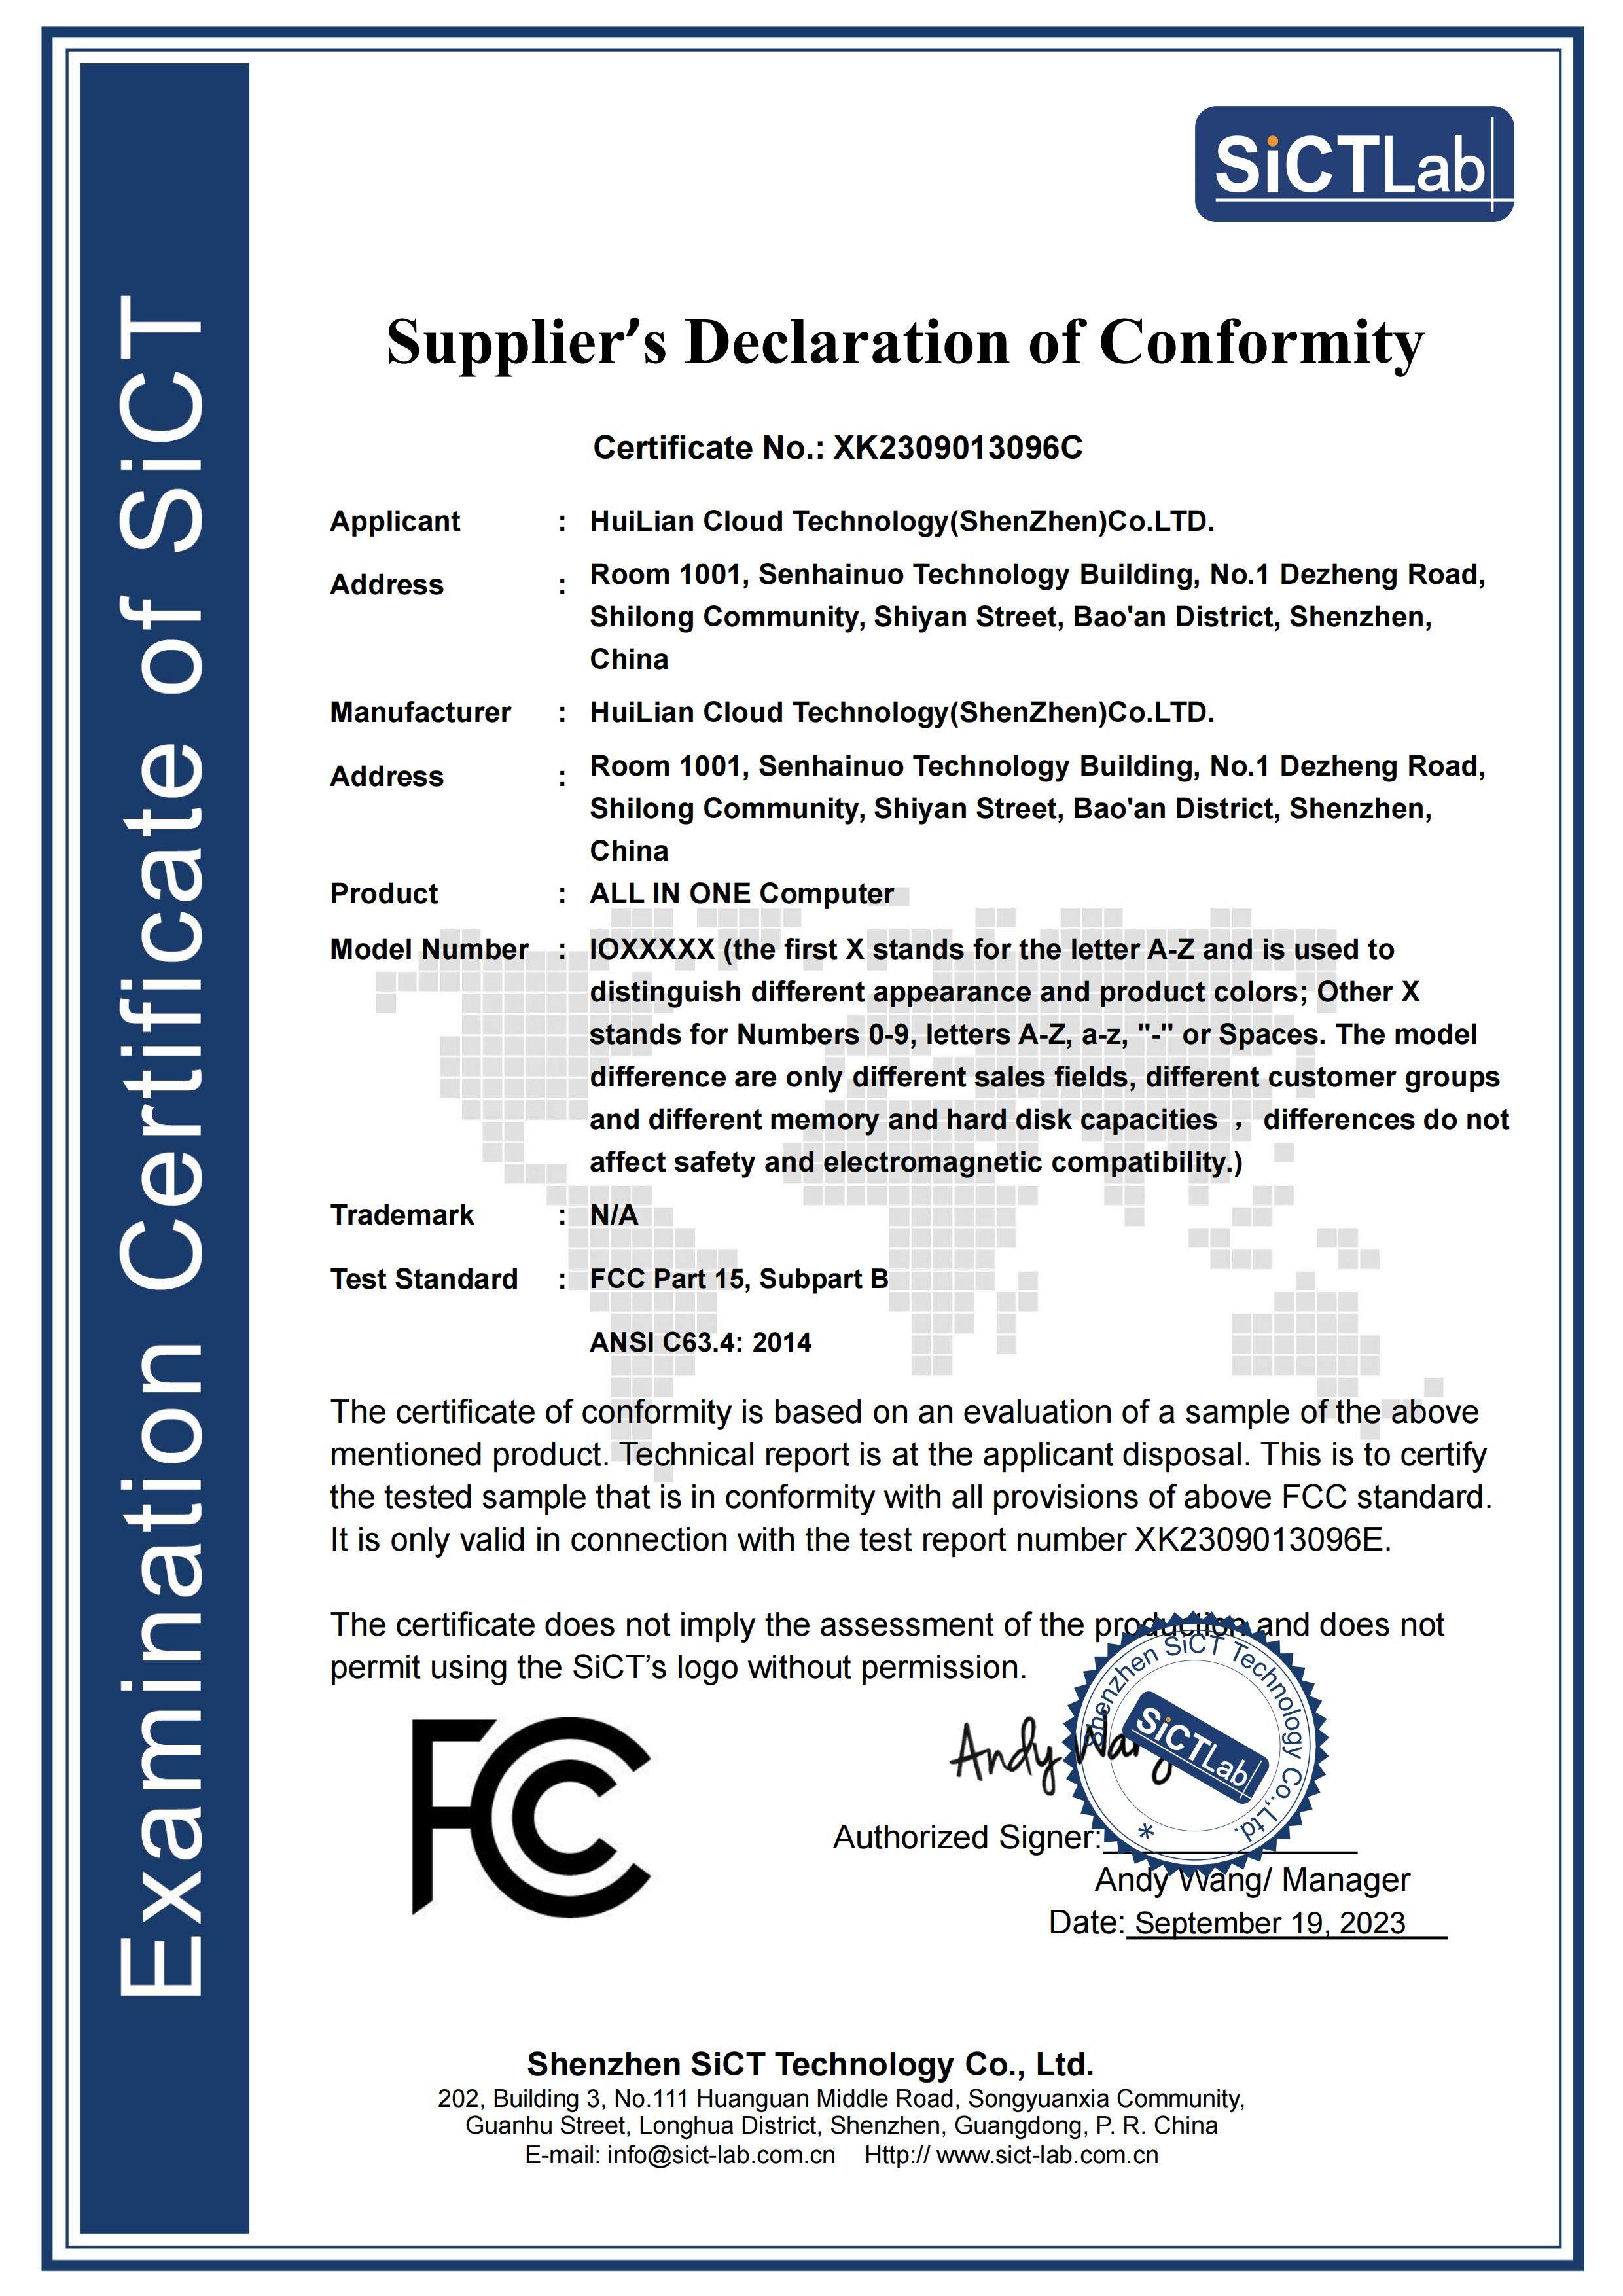 FCC Certificate - All in One PC